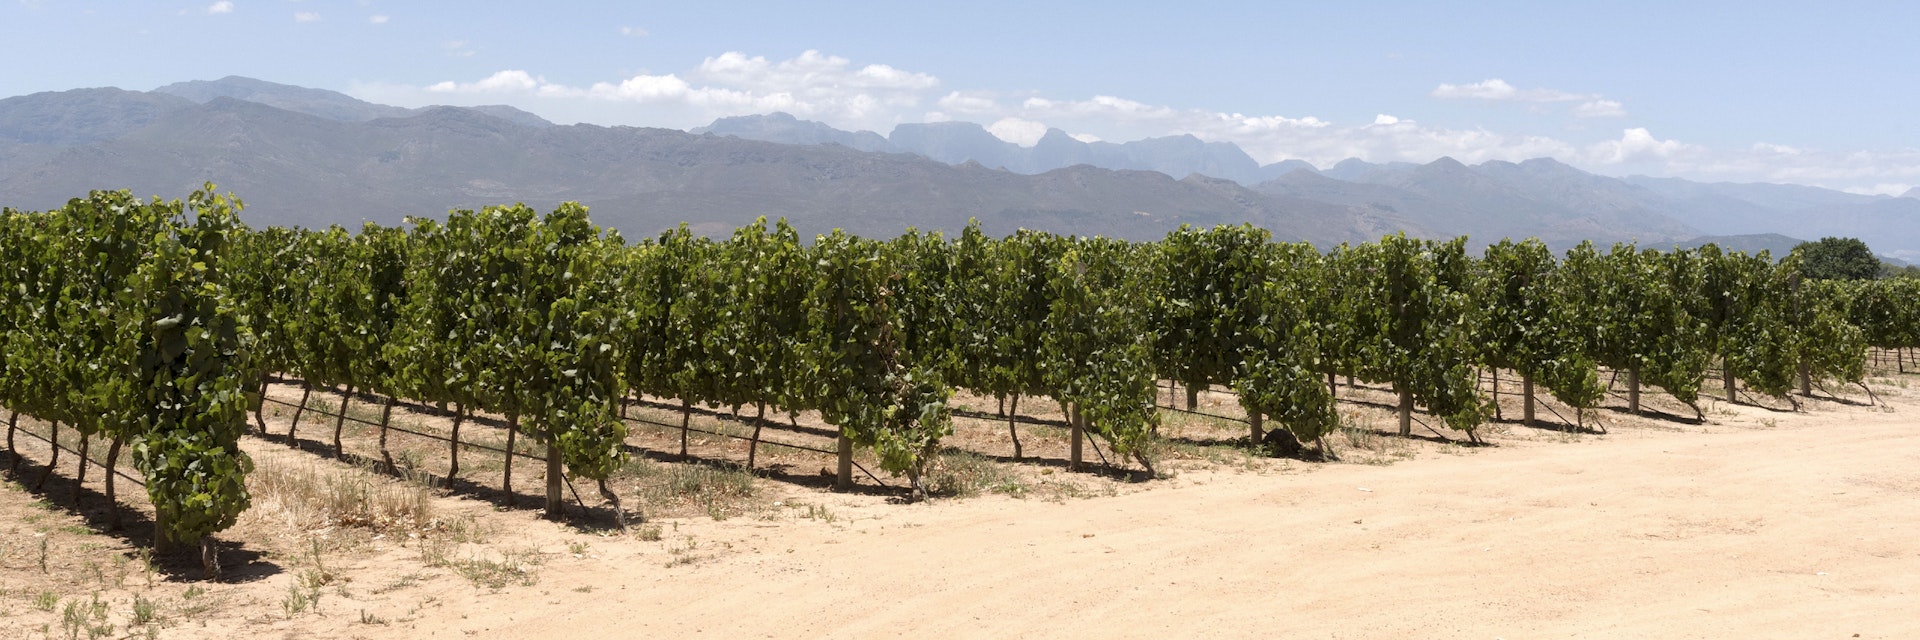 Simondium near Paarl Western Cape South Africa, Vineyard of the Babylonstoren wine estate.